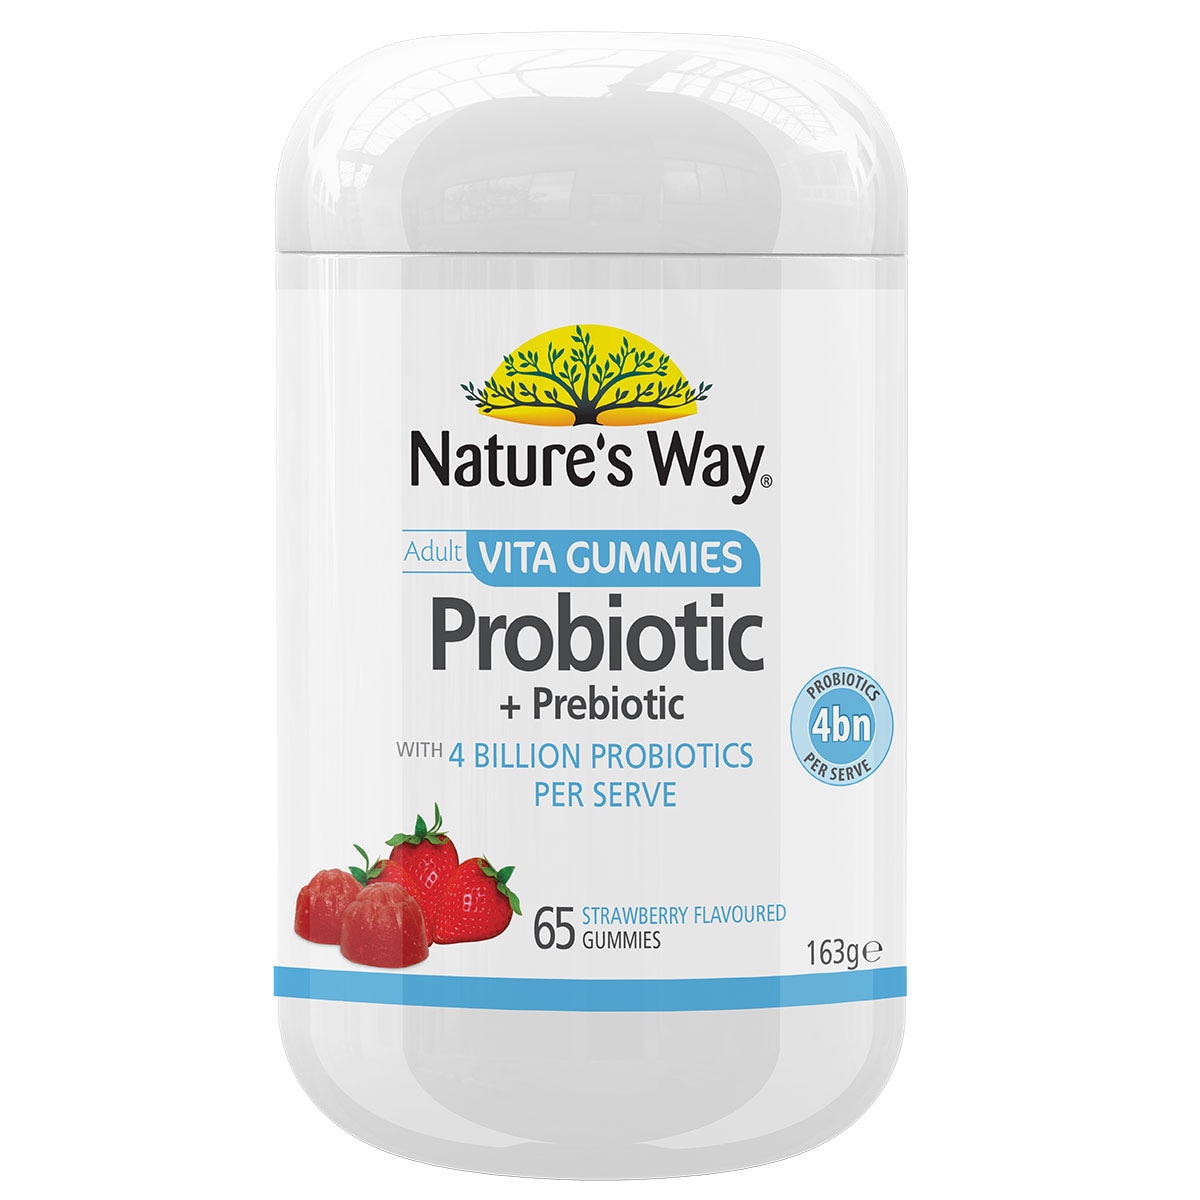 Natures Way Adult Vita Gummies Probiotic + Prebiotic Sugar Free 65 Pack Improved